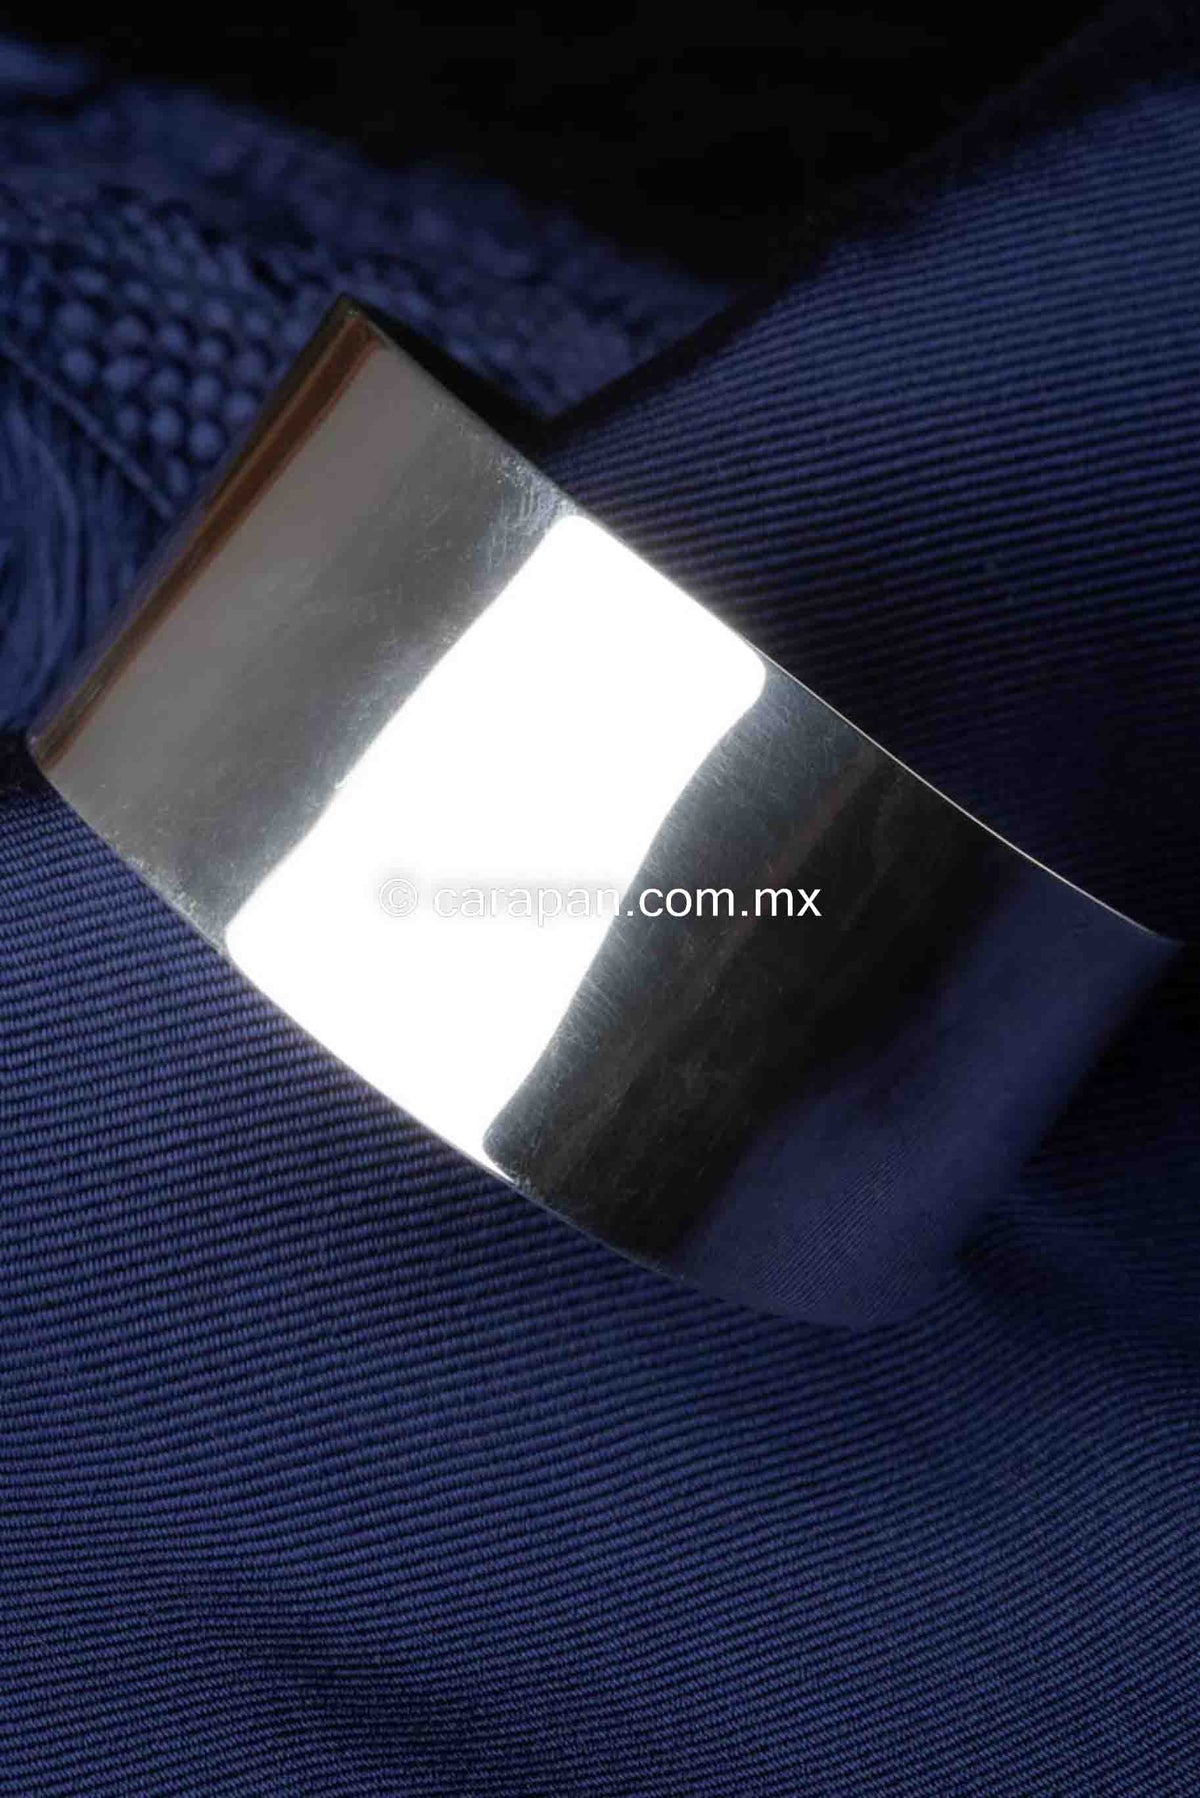 Polished Silver Cuff Bracelet